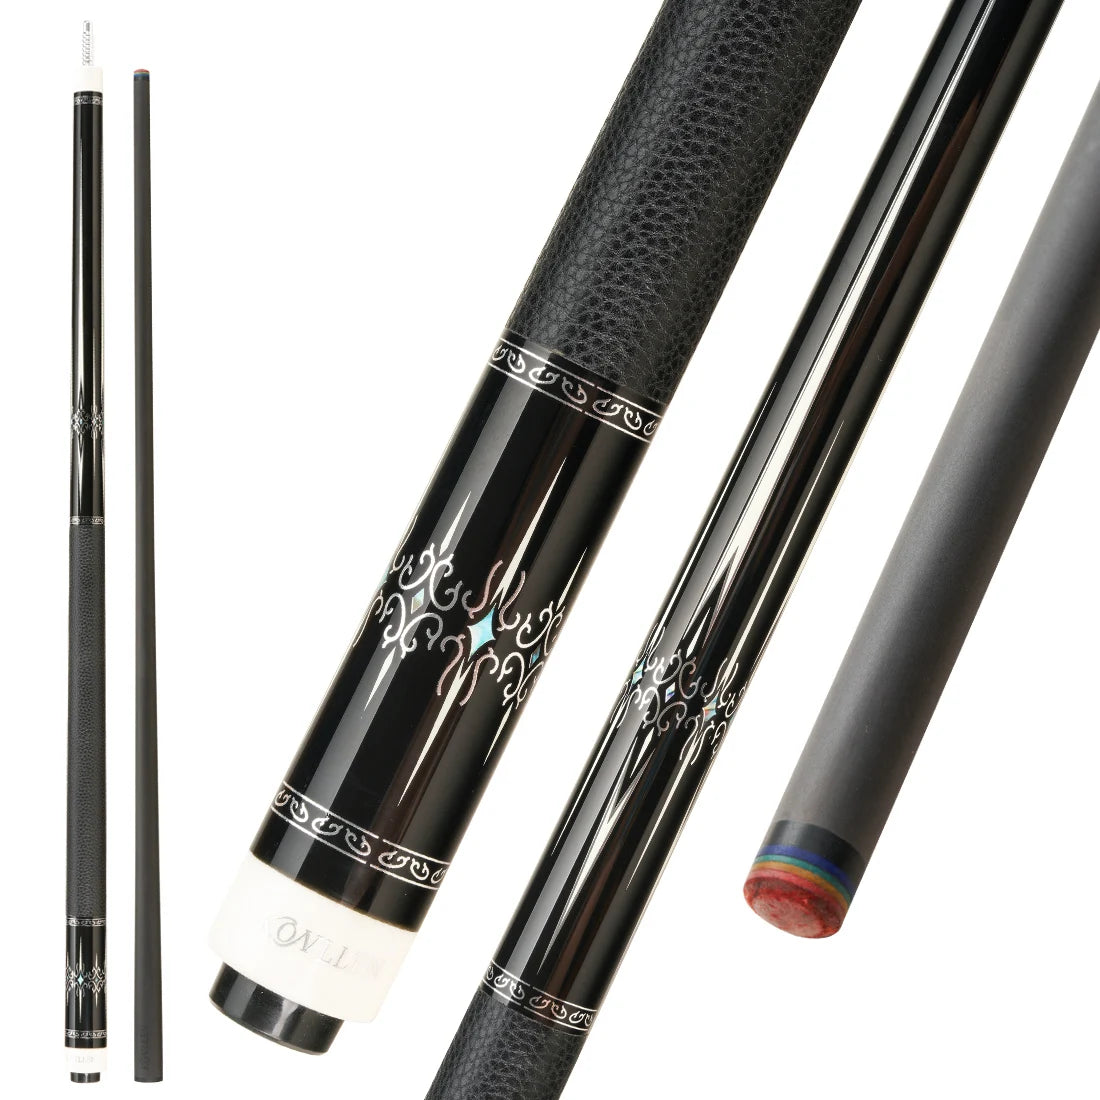 KONLLEN Billiard KL-3K Carbon Fiber Pool Cue Stick 12.2mm Tip 3*8/8 Uniloc Joint Pin Professional Low Deflection Stick Kit